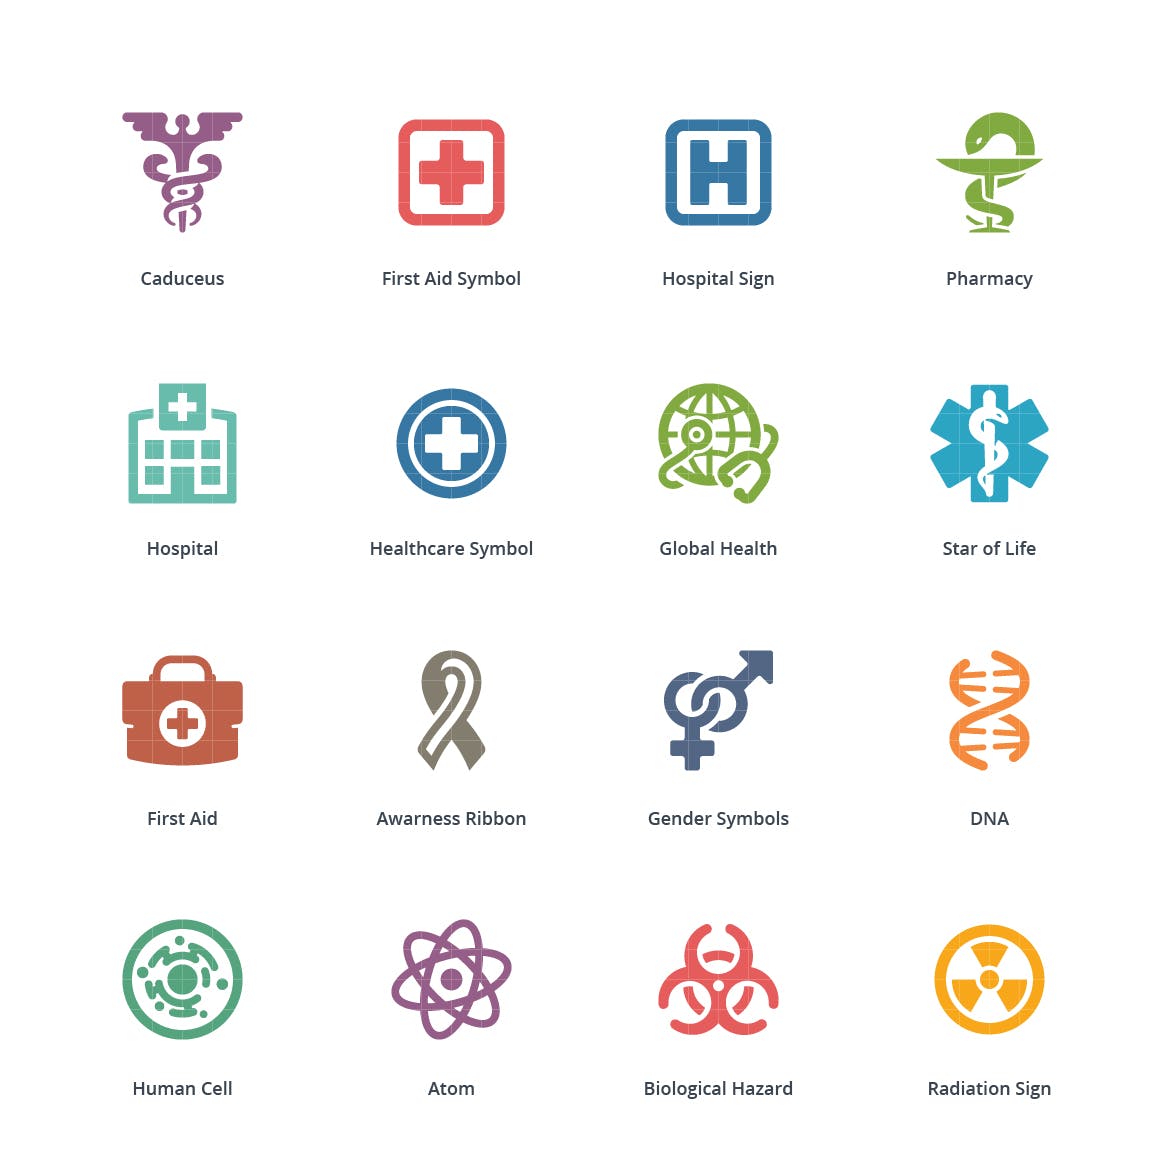 Colored系列-医疗保健主题矢量素材库精选图标集v1 Medical & Health Care Icons Set 1 – Colored Series插图(1)